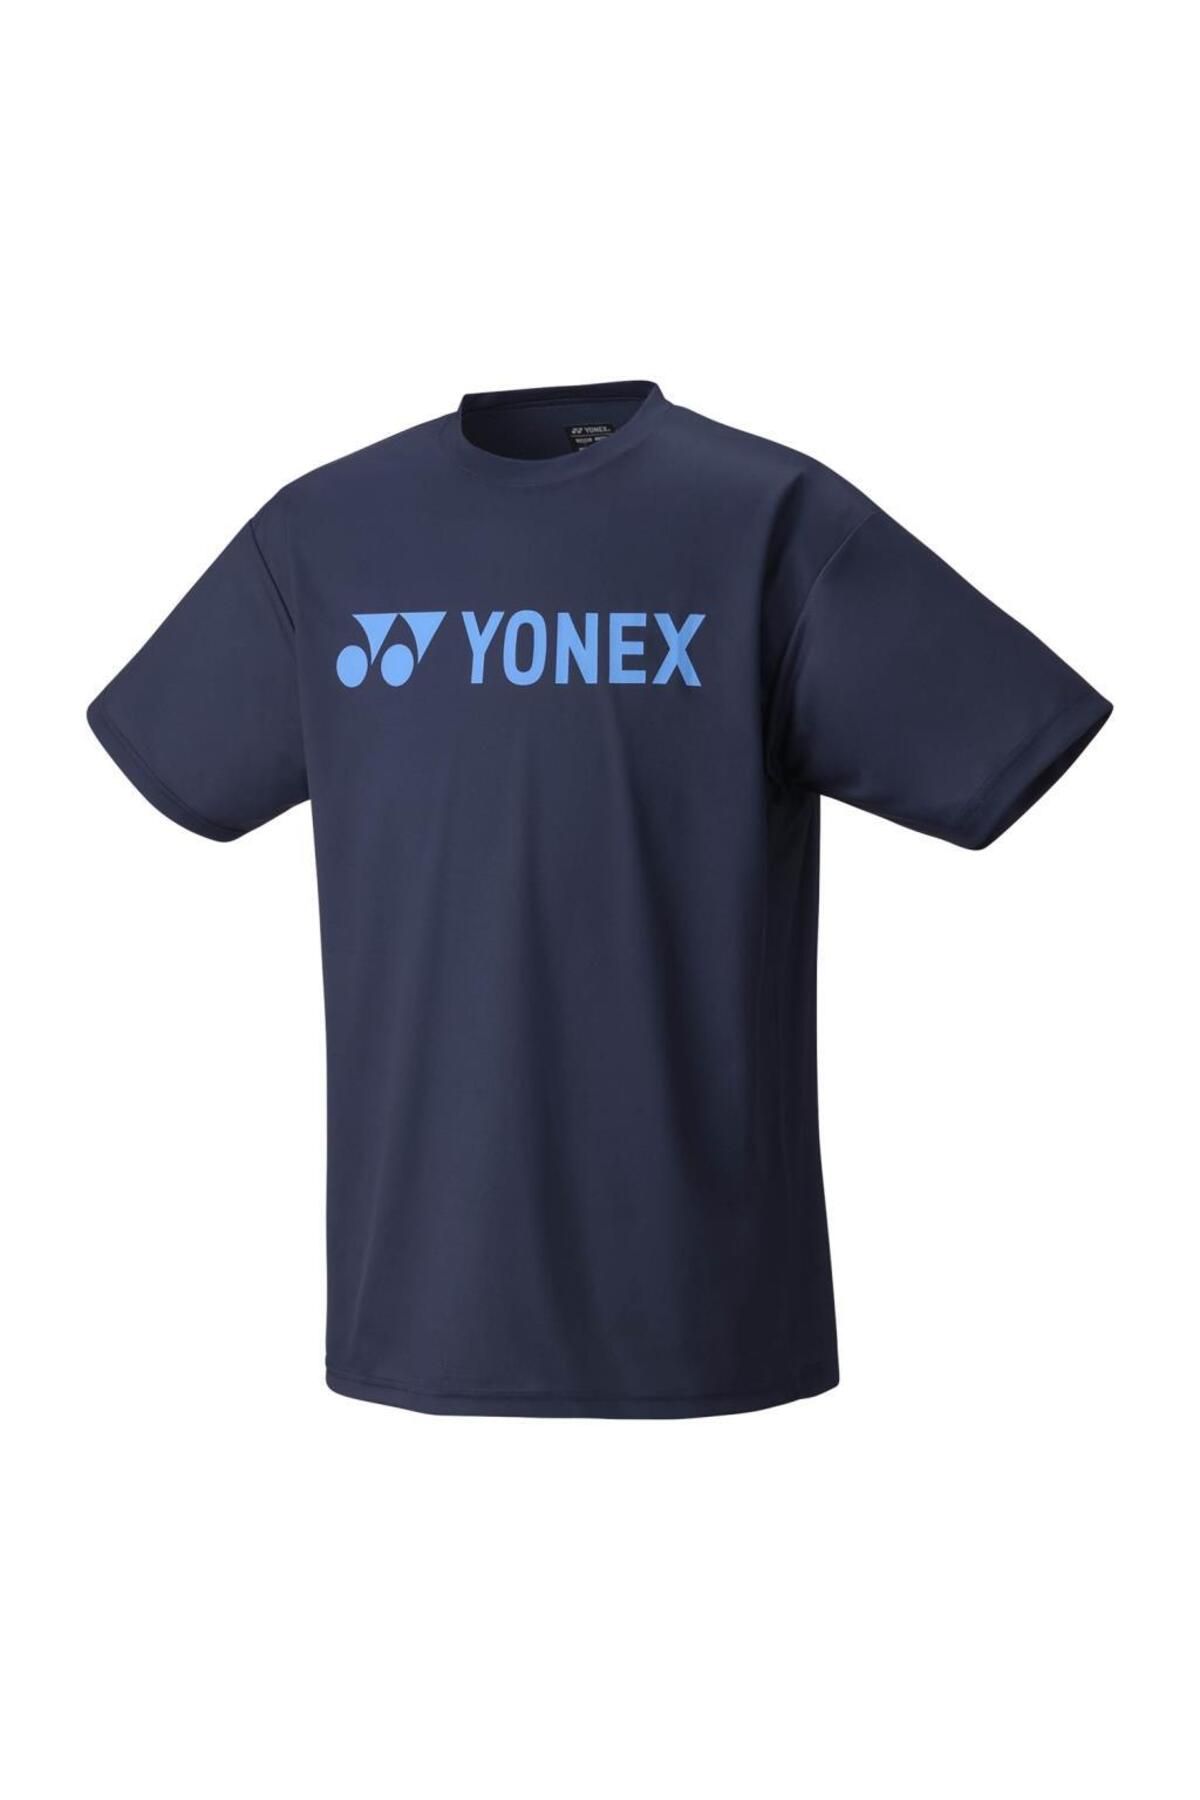 Yonex Tshirt Lacivert Erkek YM0046